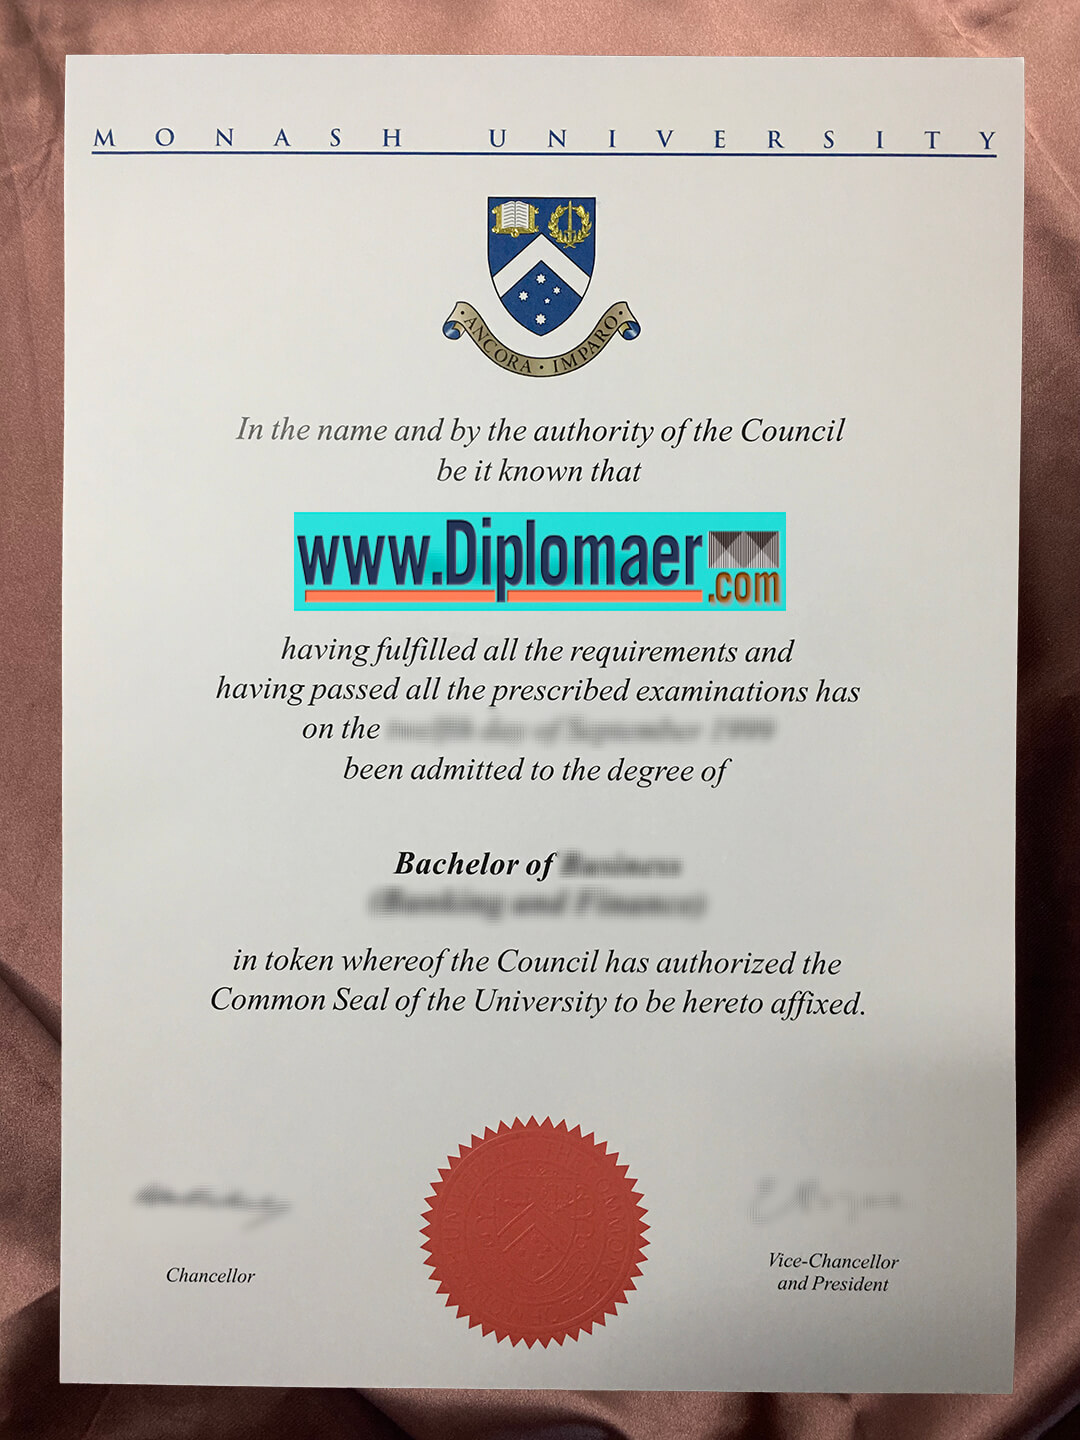 Monash University fake diploma - How to get a fake diploma in Australia? Buy Monash University fake degrees.